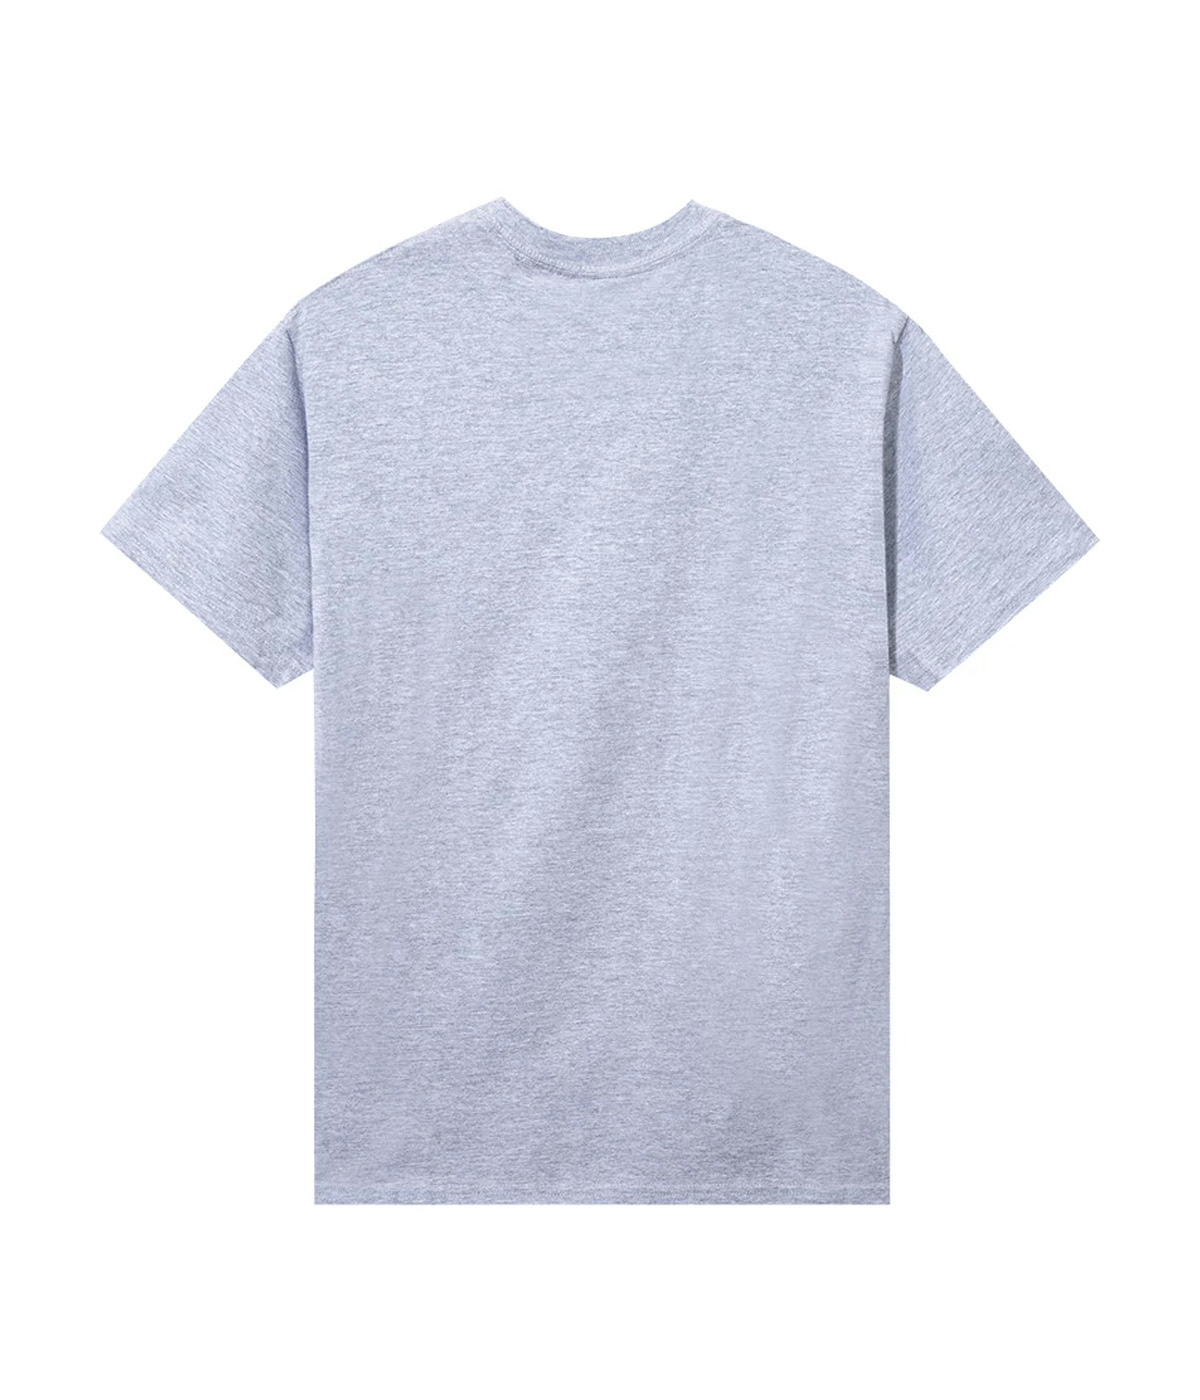 Call Me 917 Surf Crafts T-shirt Grey 2